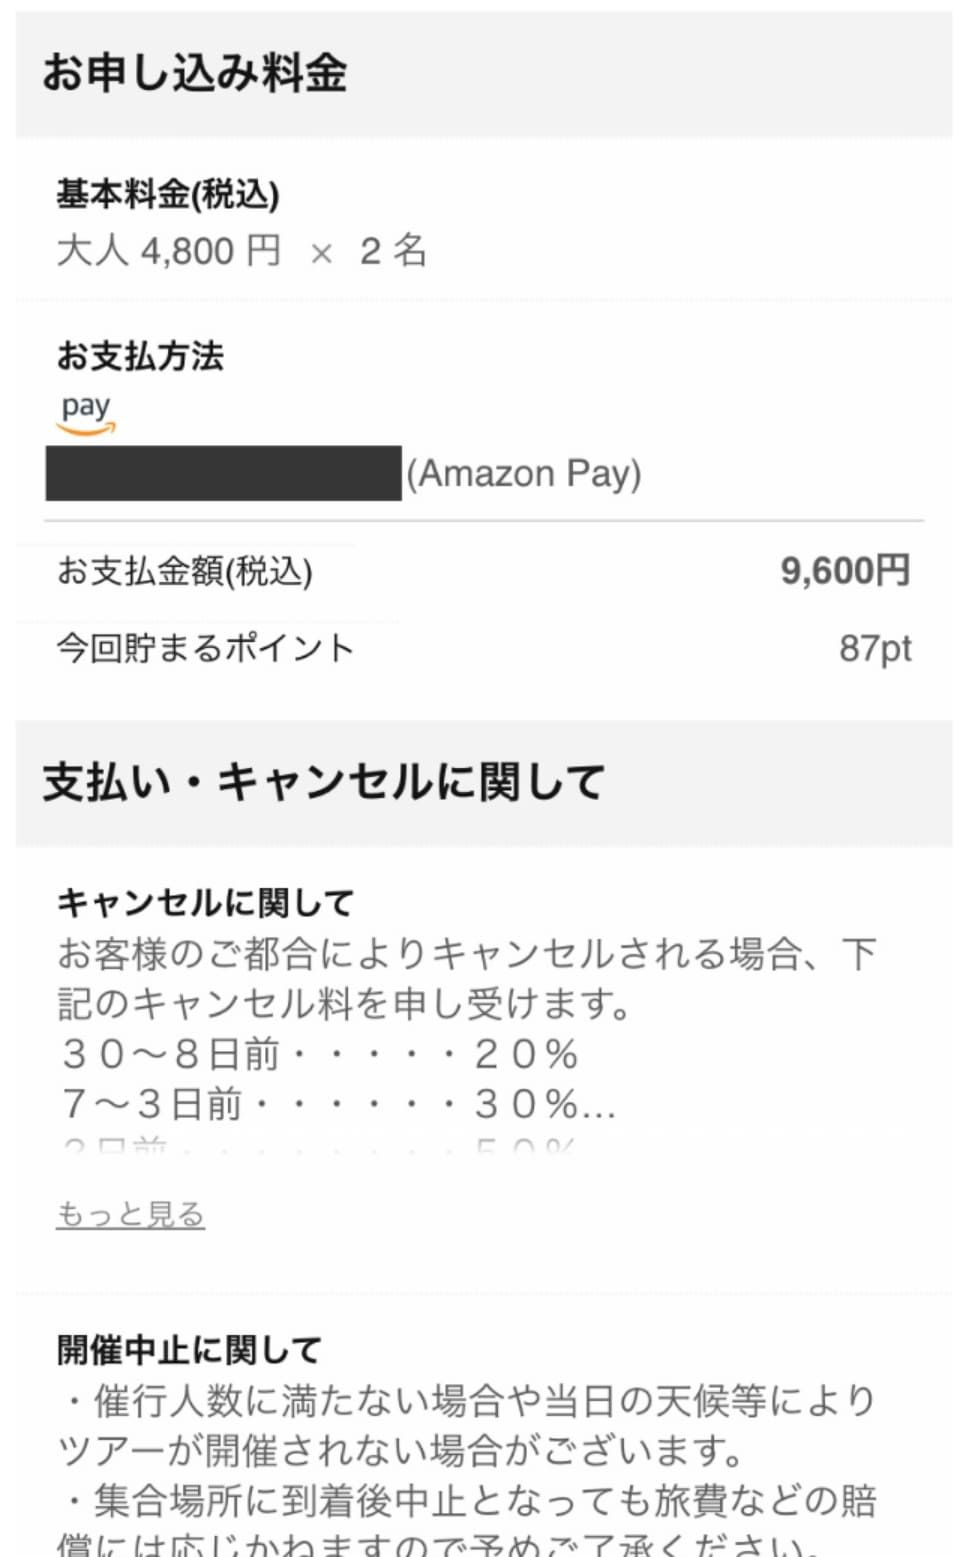 Amazon Pay支払金額を確認